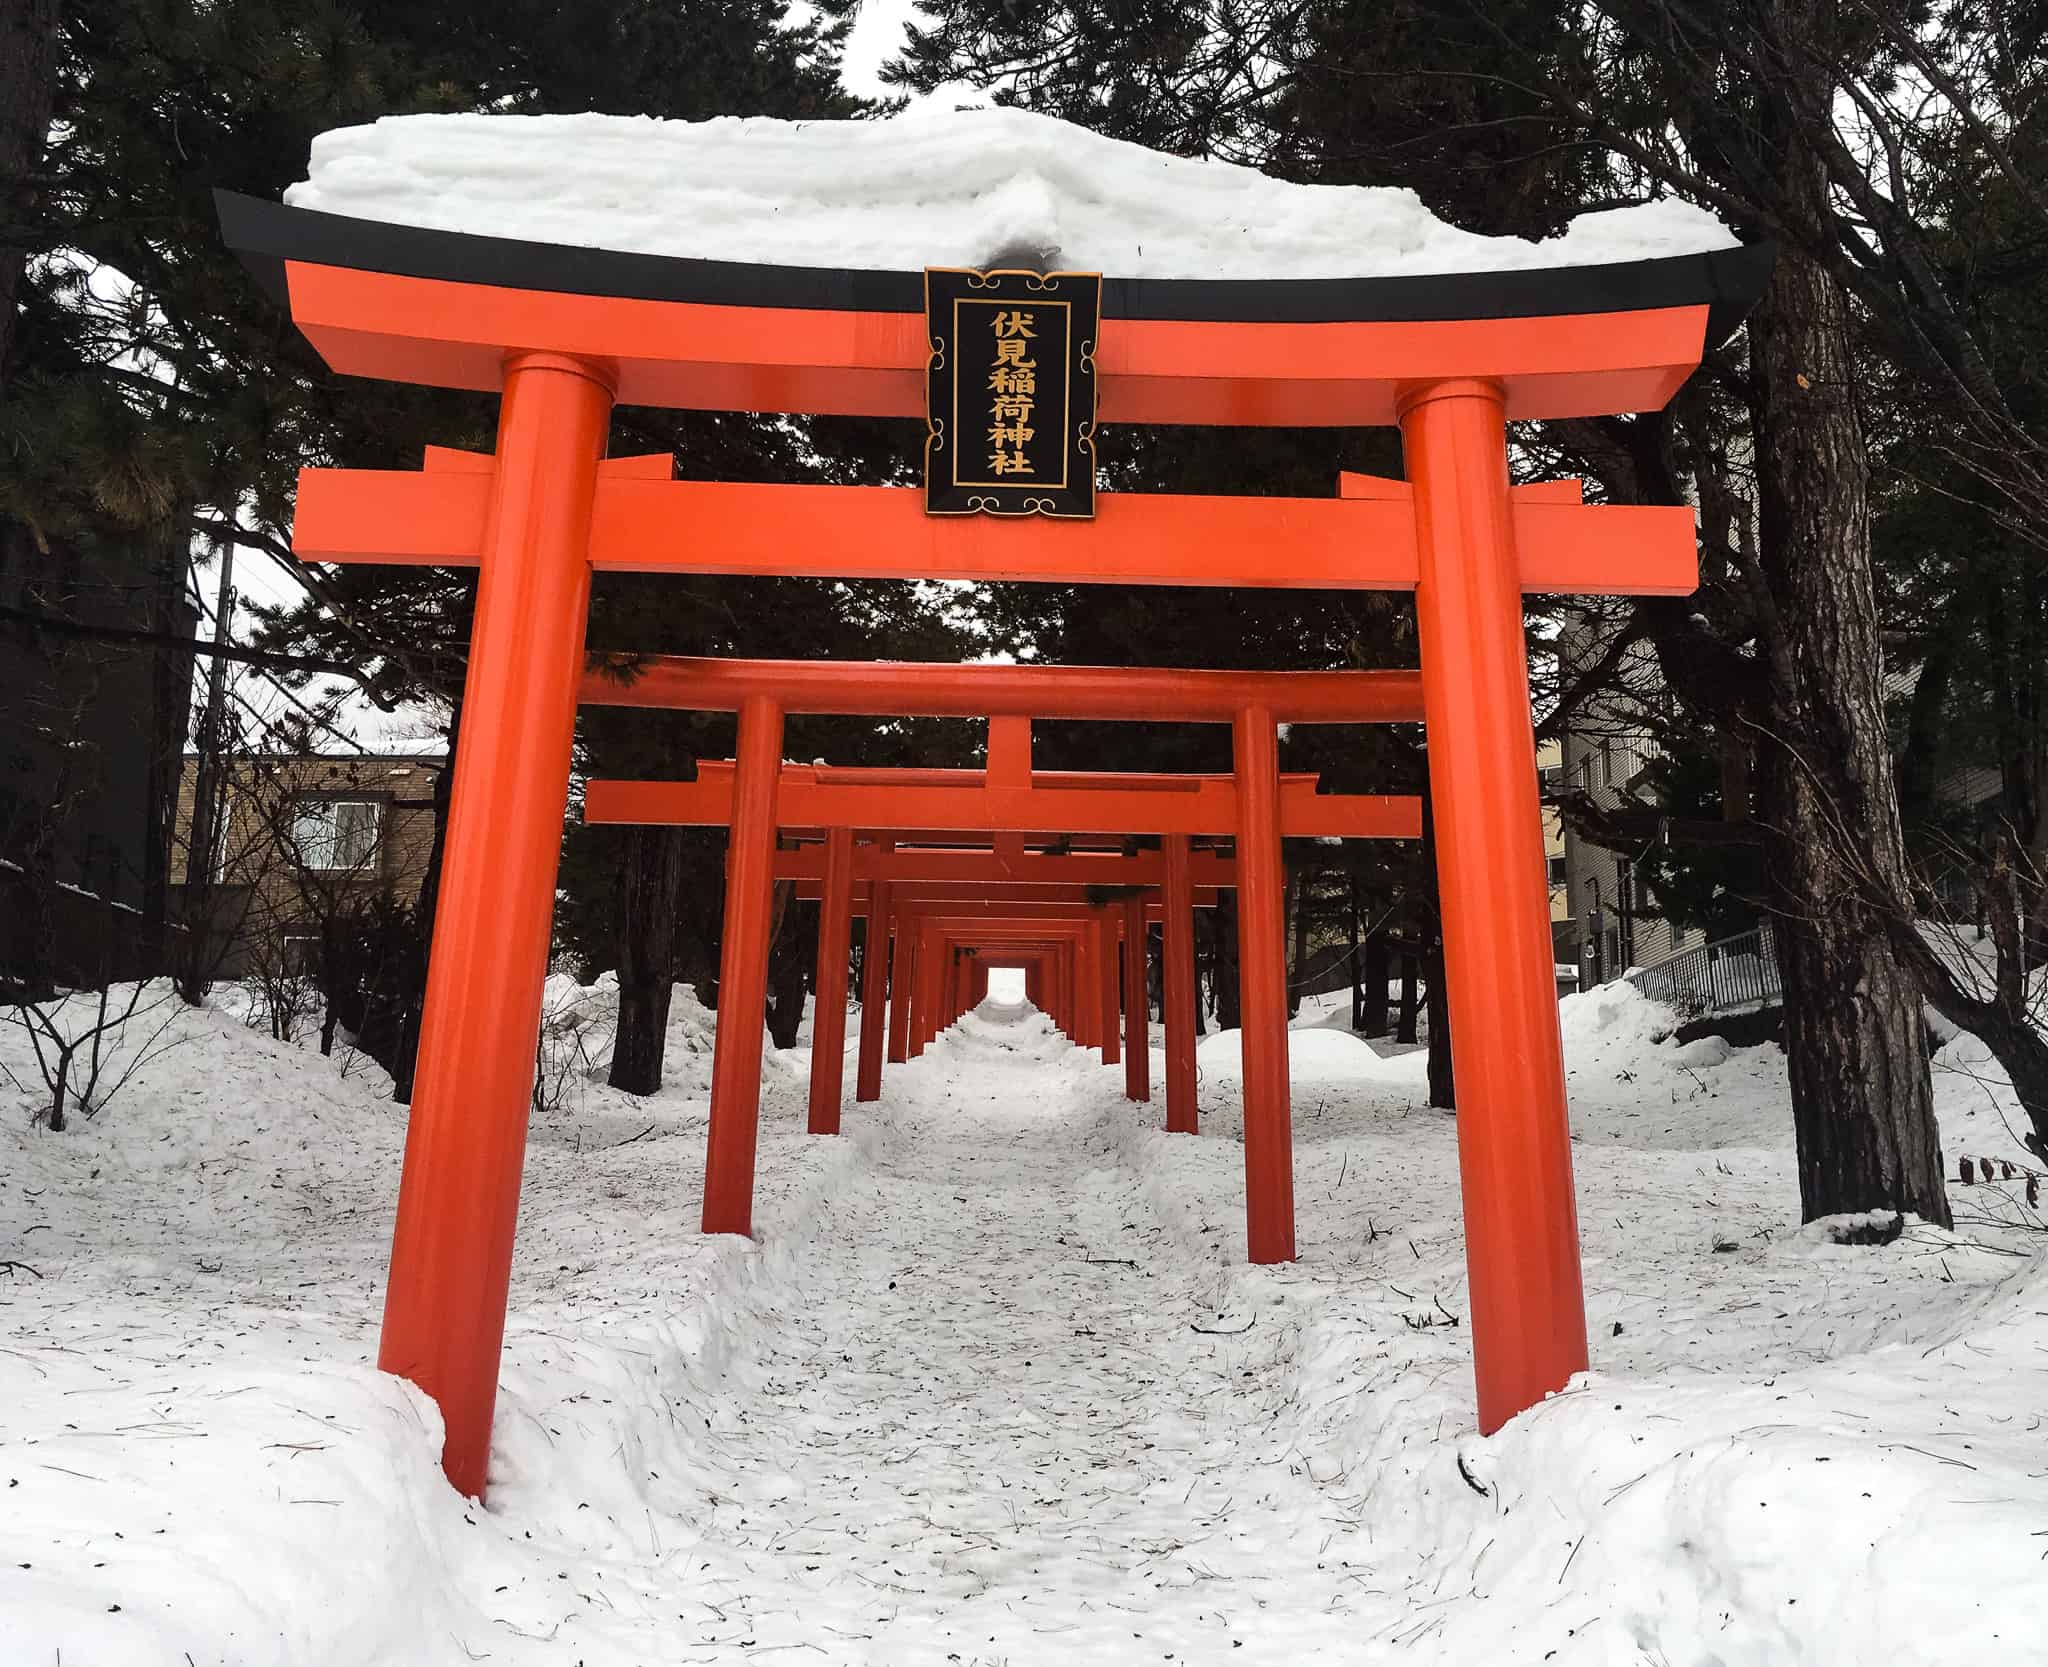 Snow covering Sapporo Fushimiinari Shrine